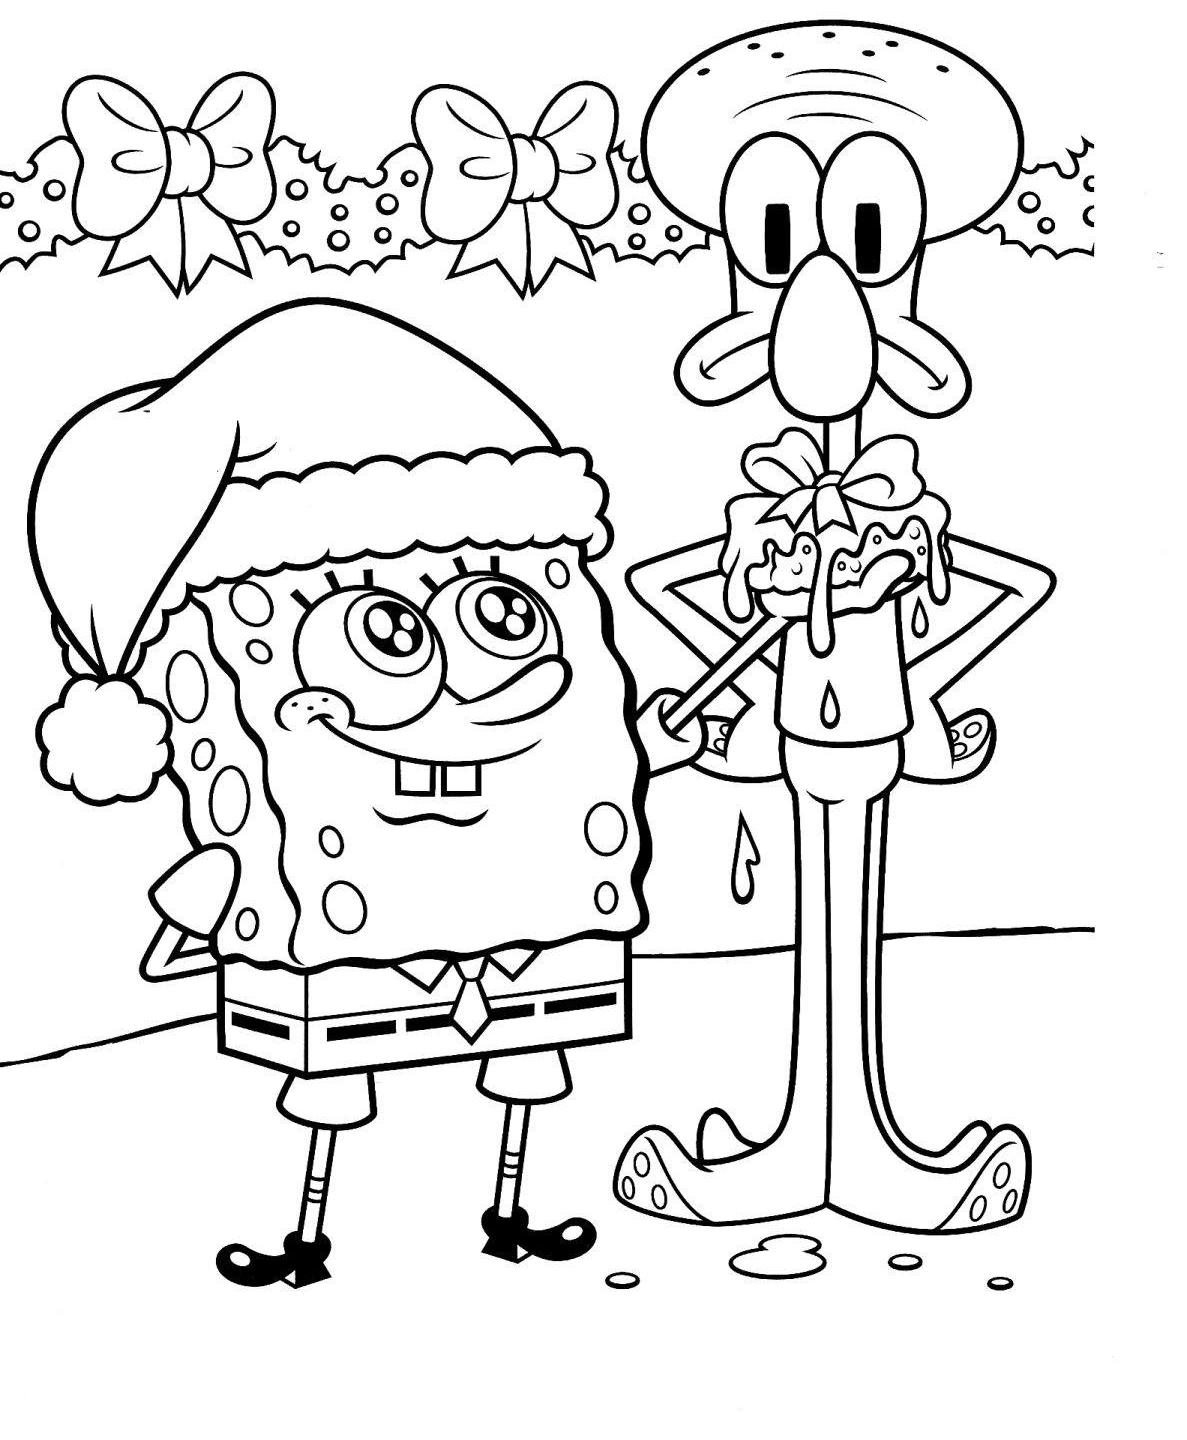 Free Printable Spongebob Coloring Pages At GetDrawings Free Download